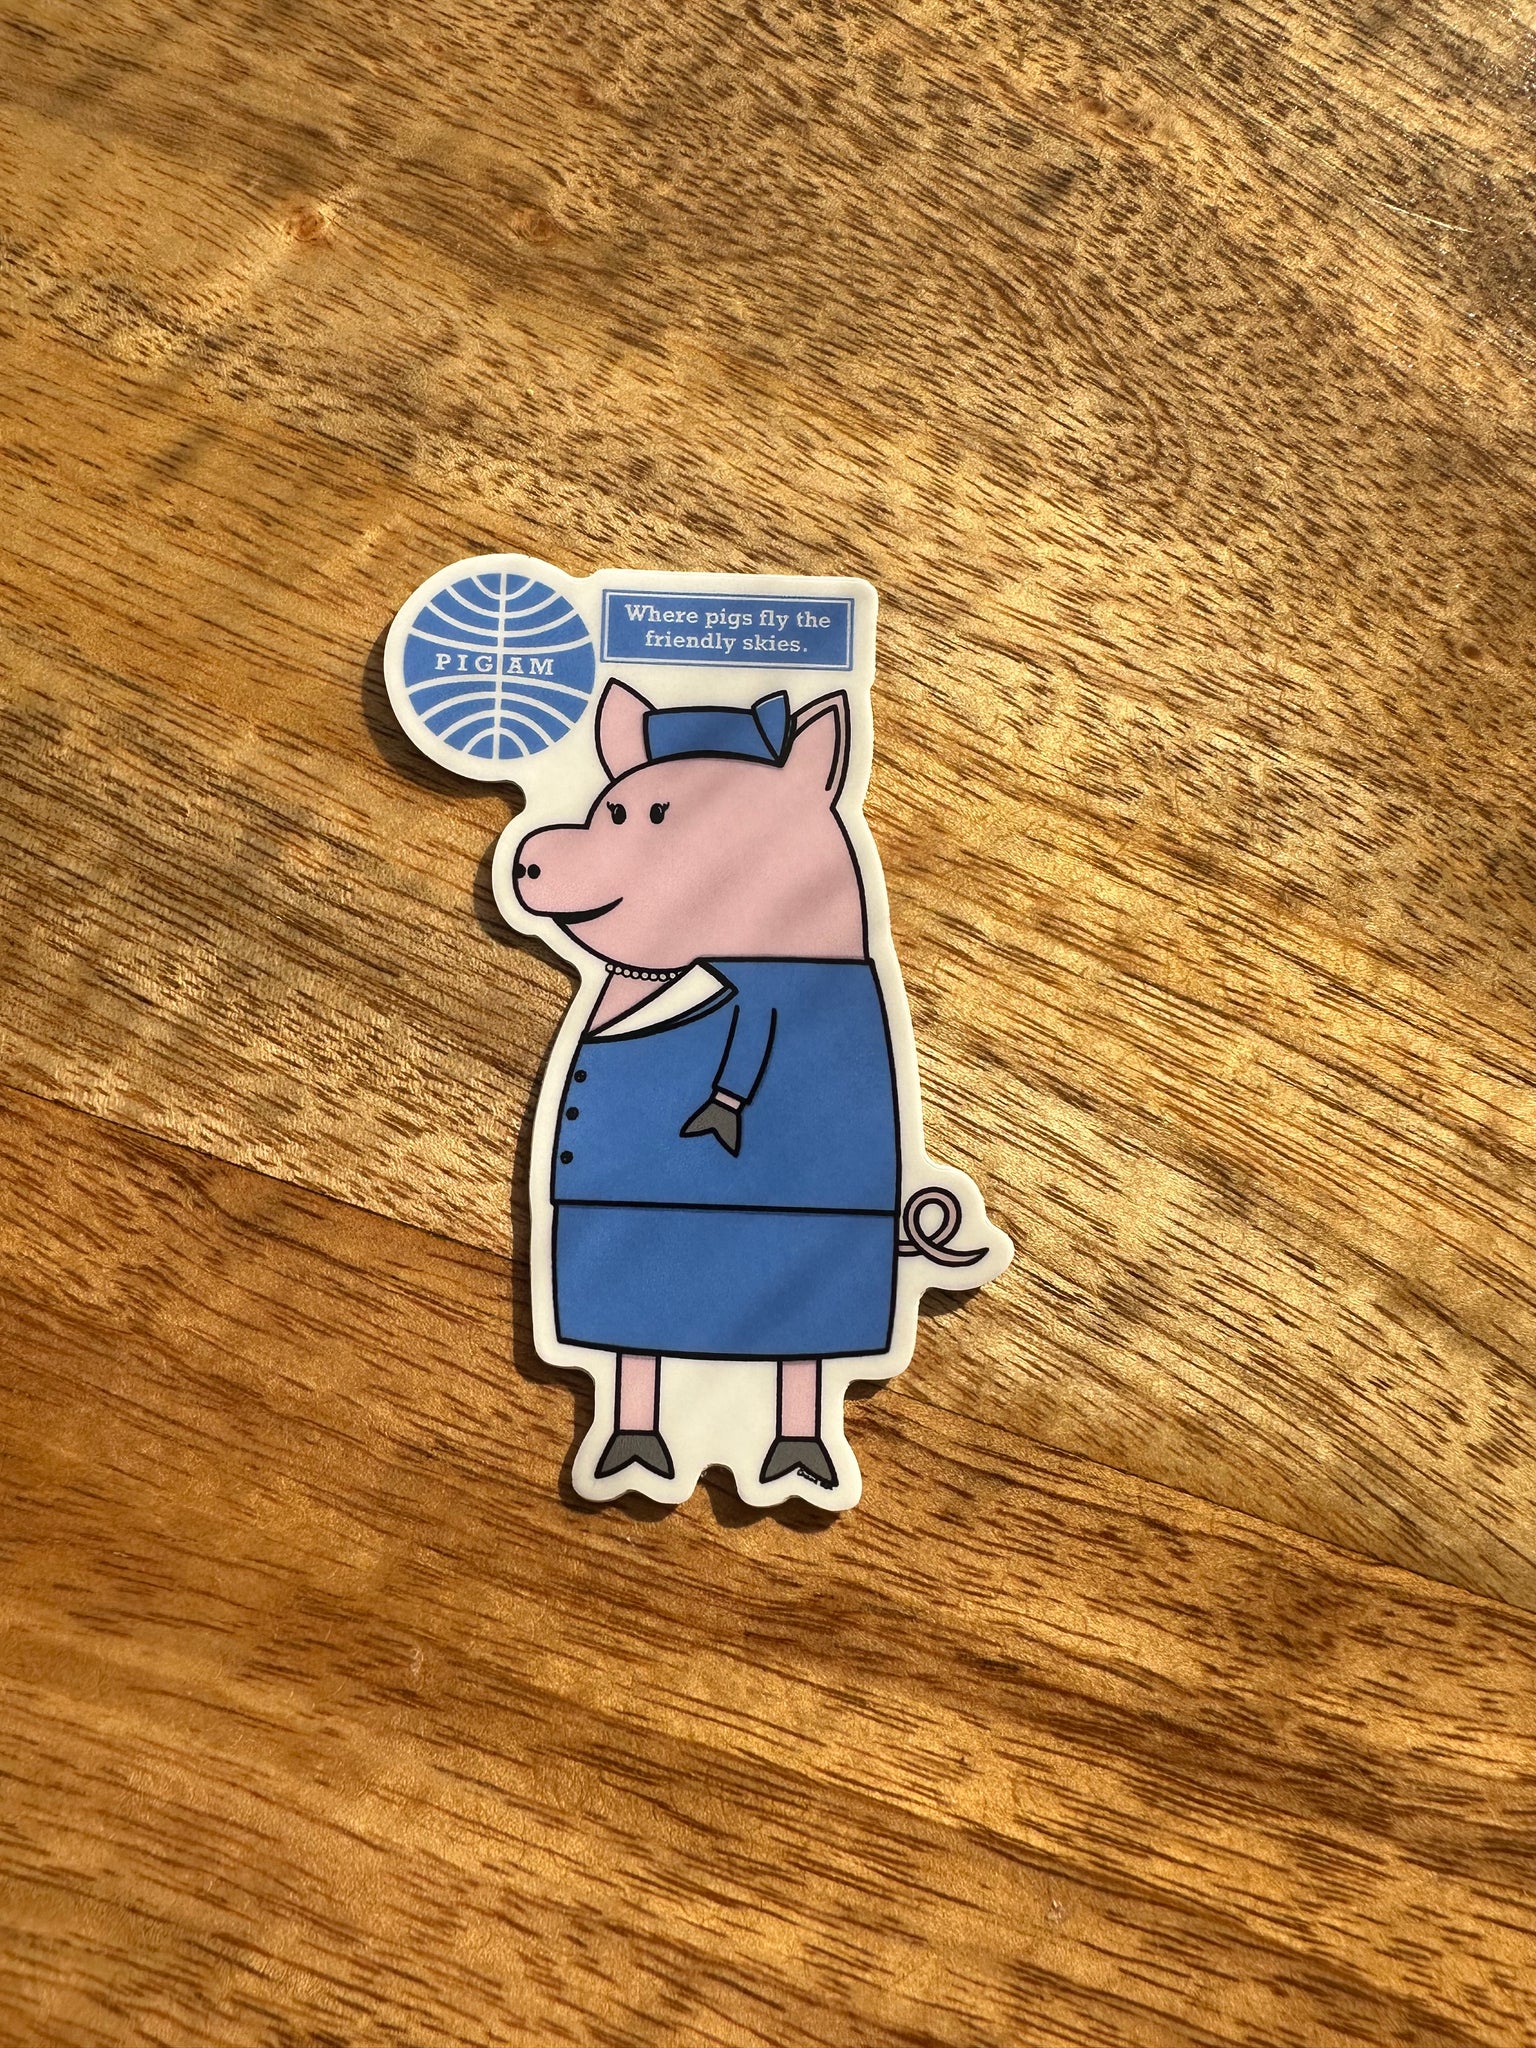 Pig Am Vinyl Sticker